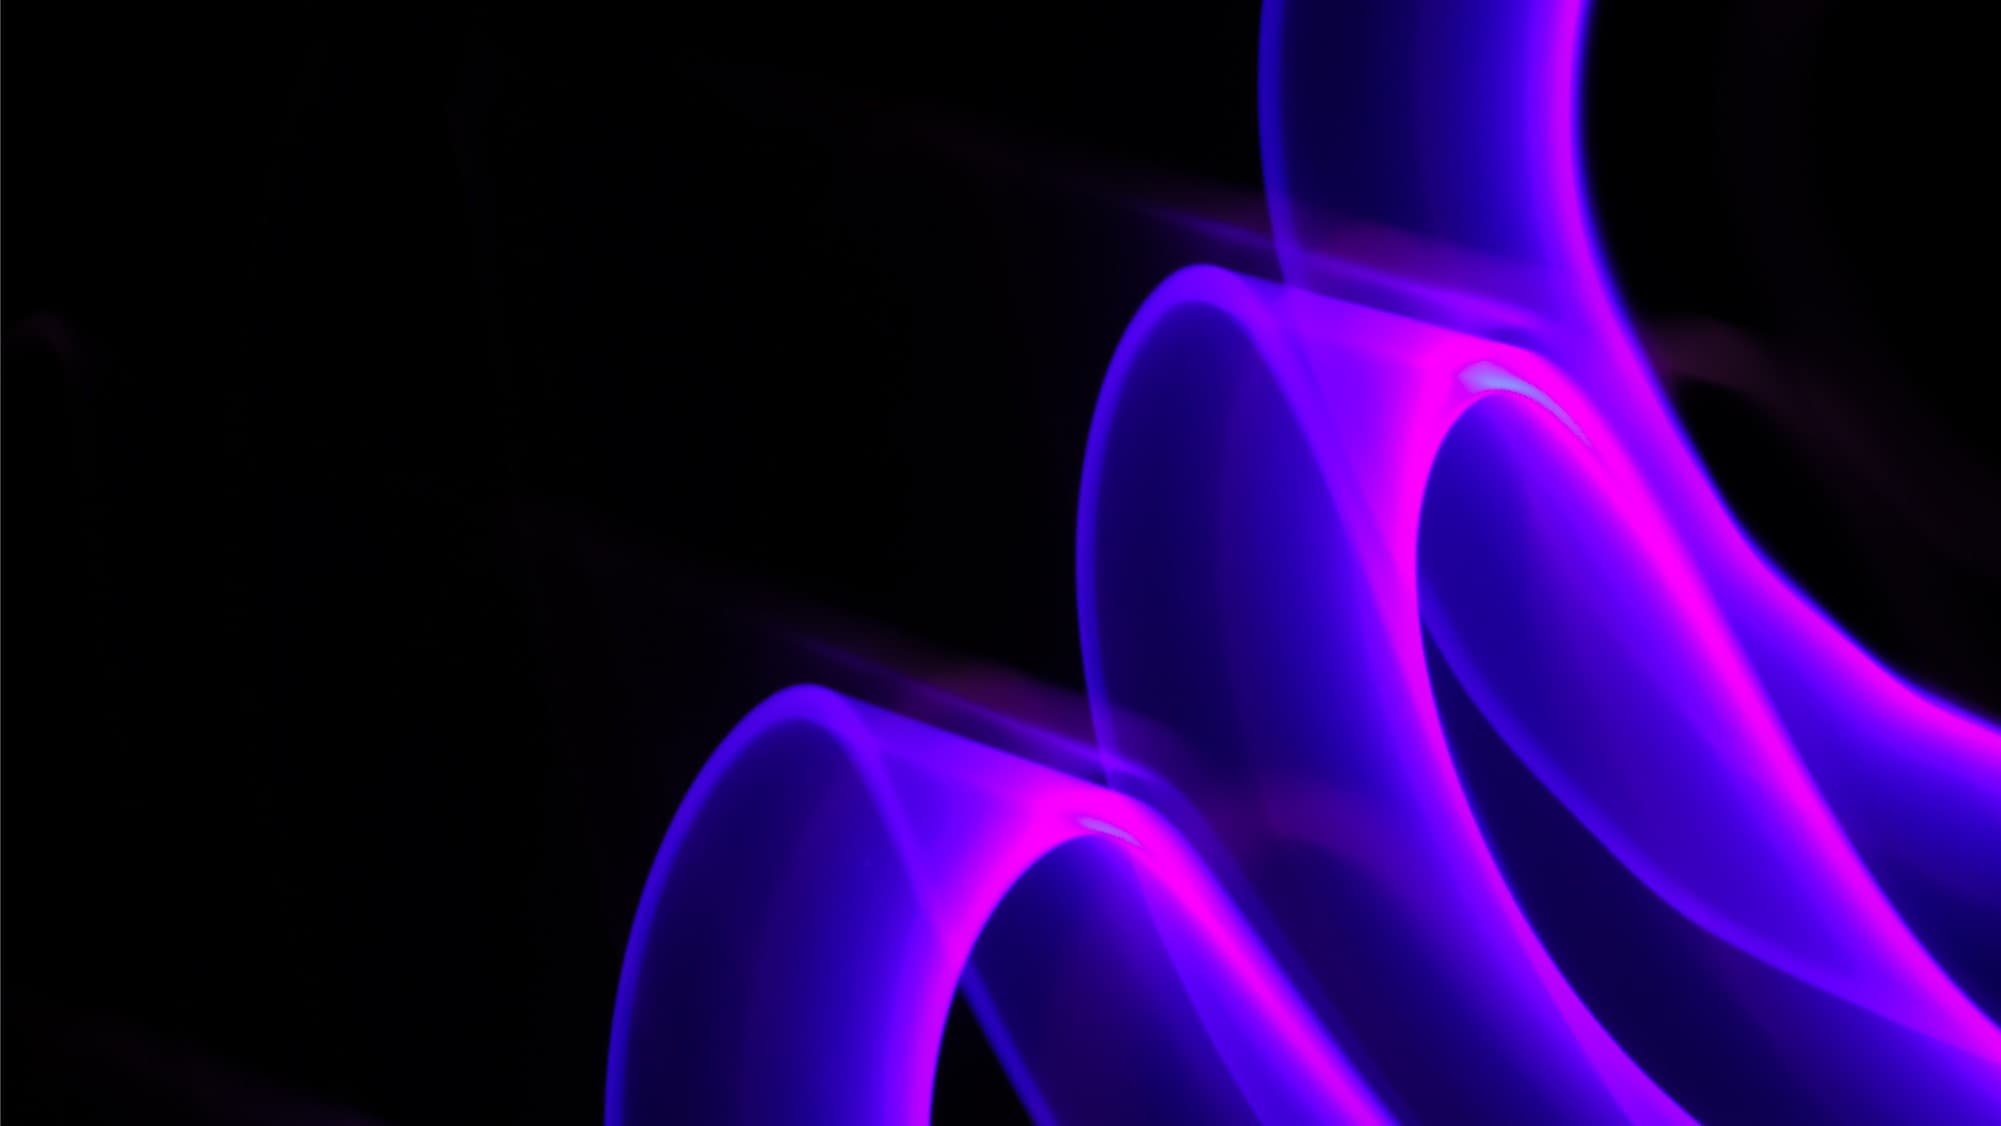 Abstract purple light microcomb texture